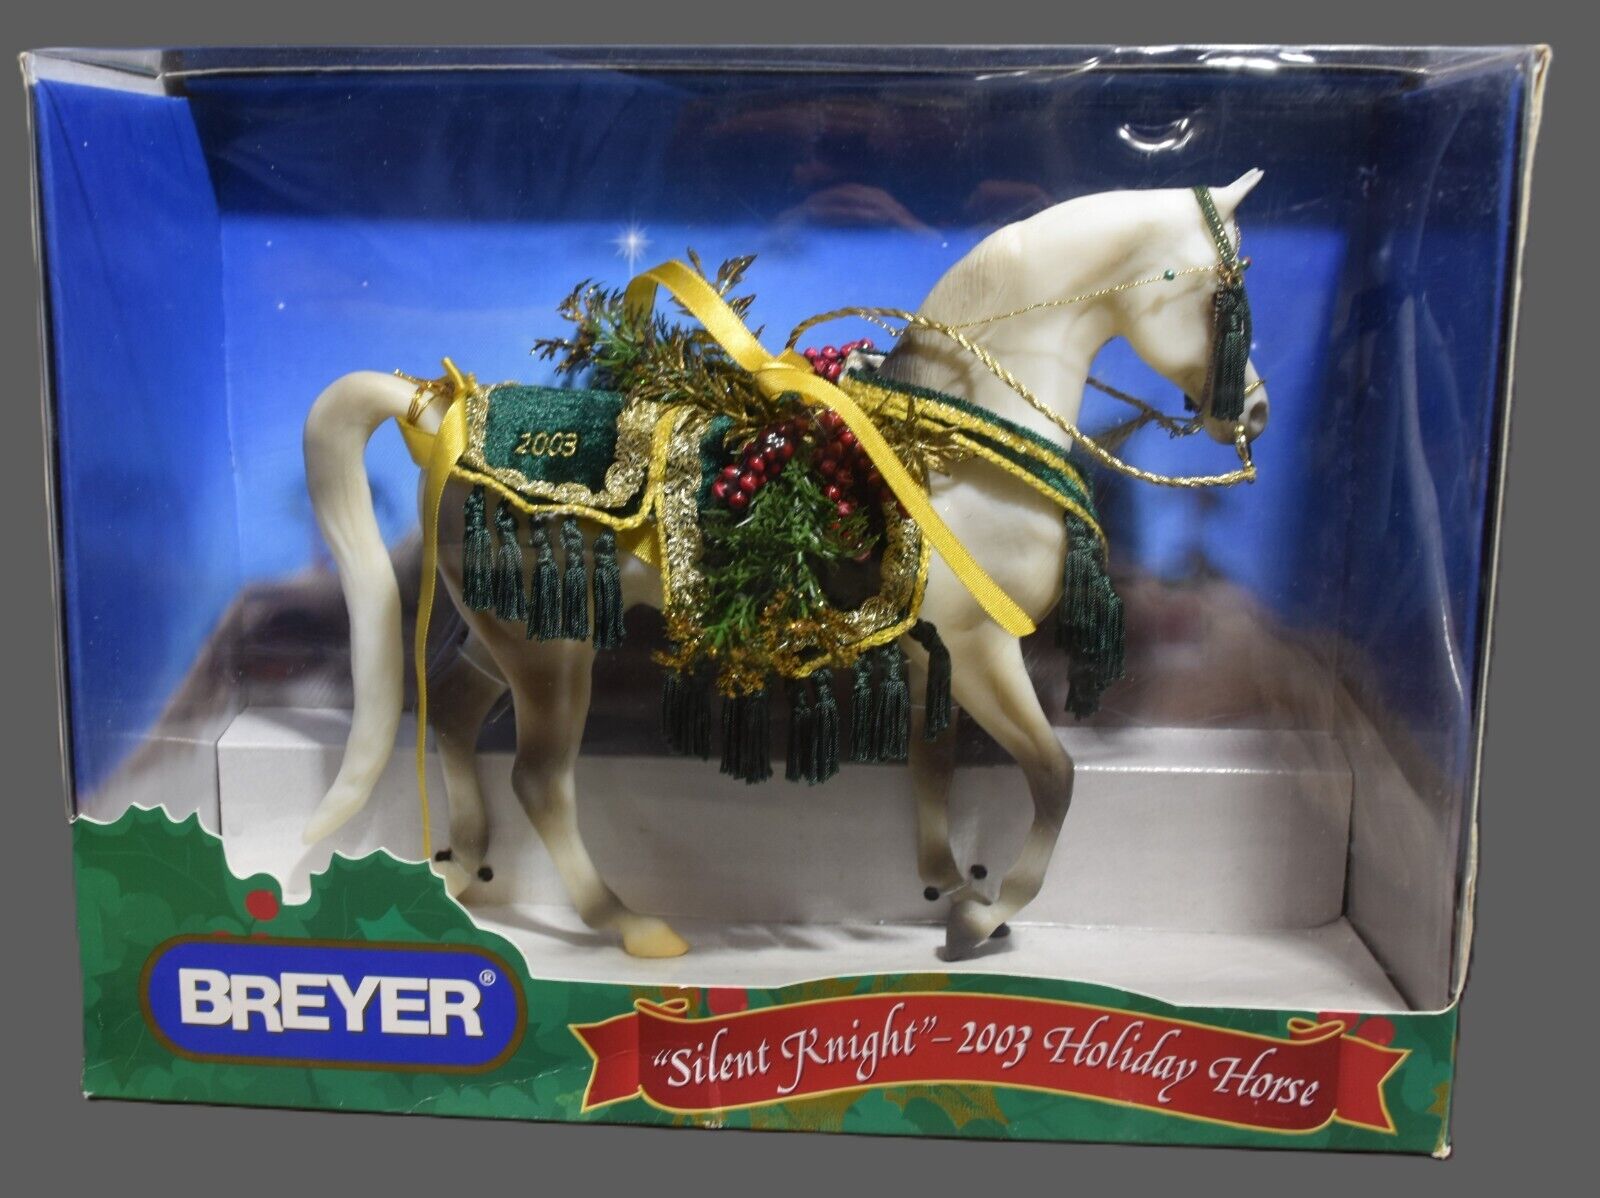 Breyer 700403 Silent Knight Arabian Holiday Horse 2003 Christmas Model - NIB